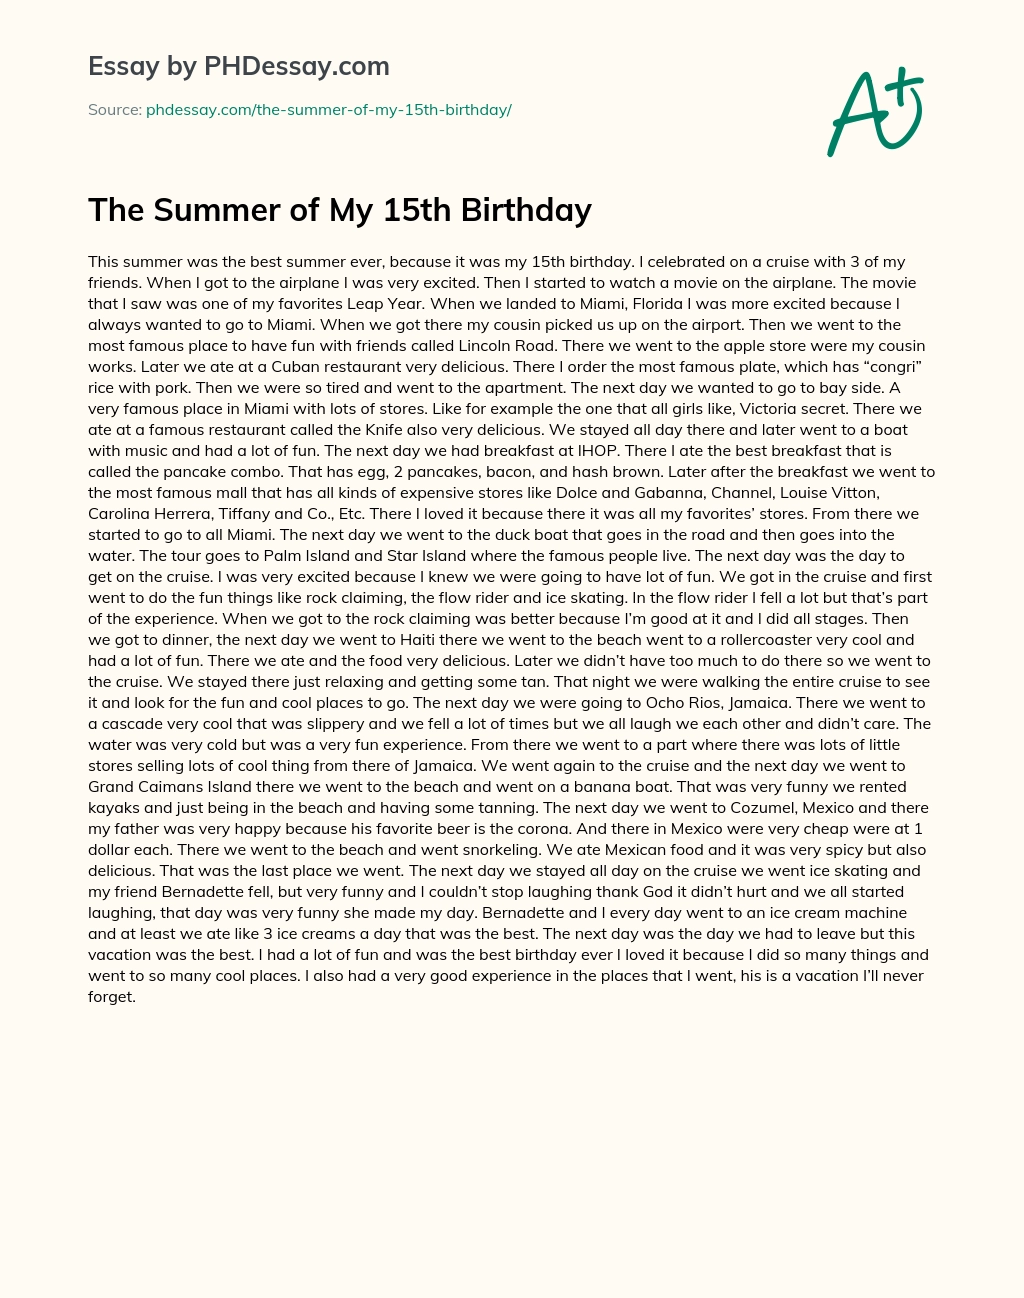 The Summer of My 15th Birthday essay